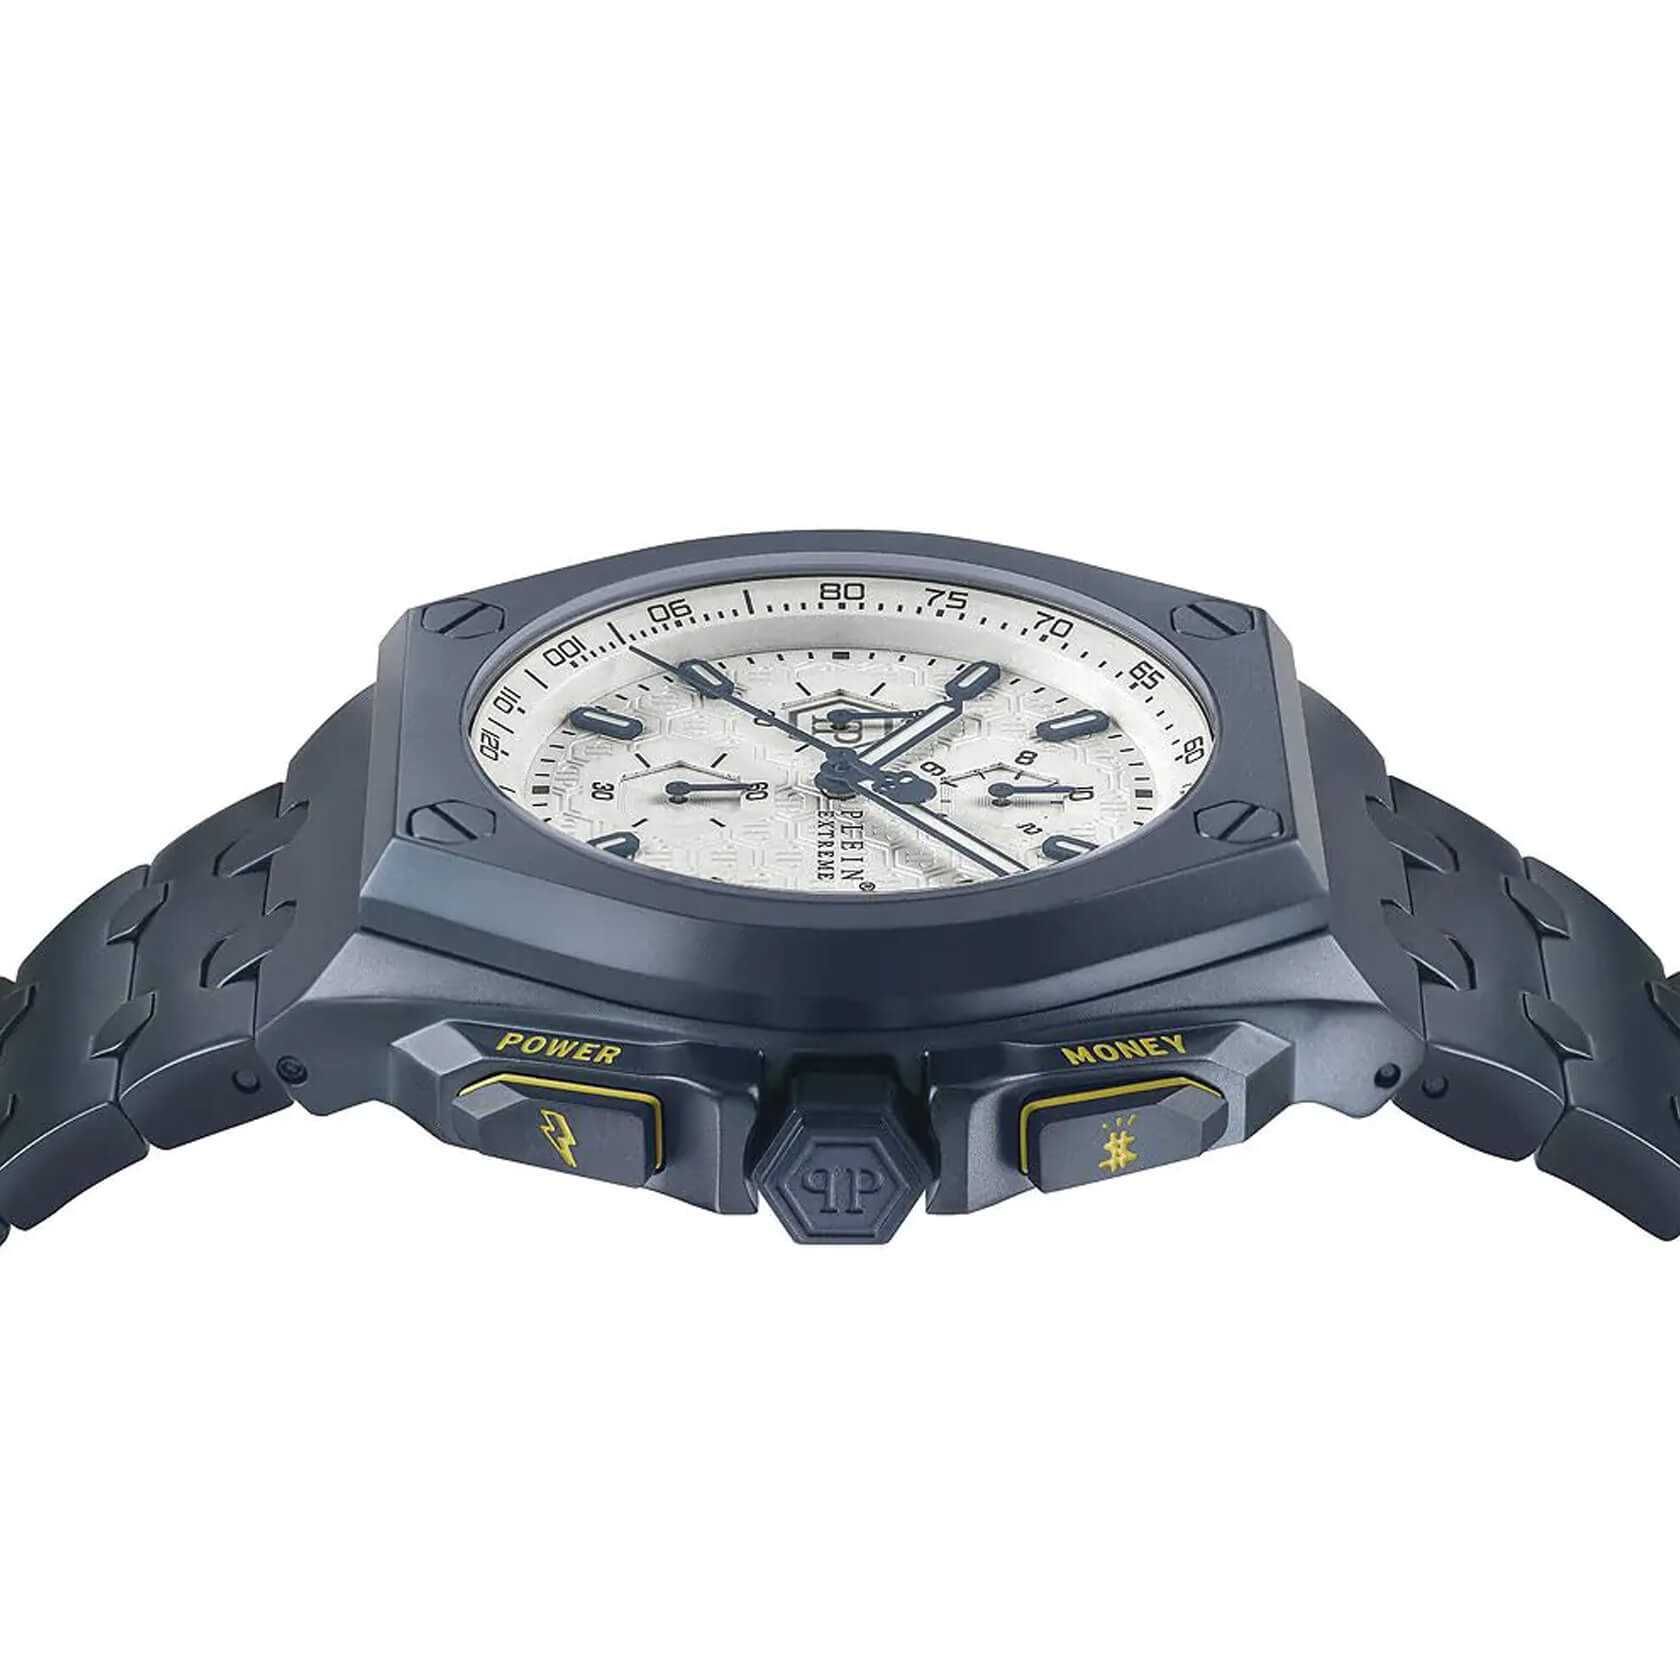 Мъжки часовник Philipp Plein Extreme Chronograph PWGAA0721